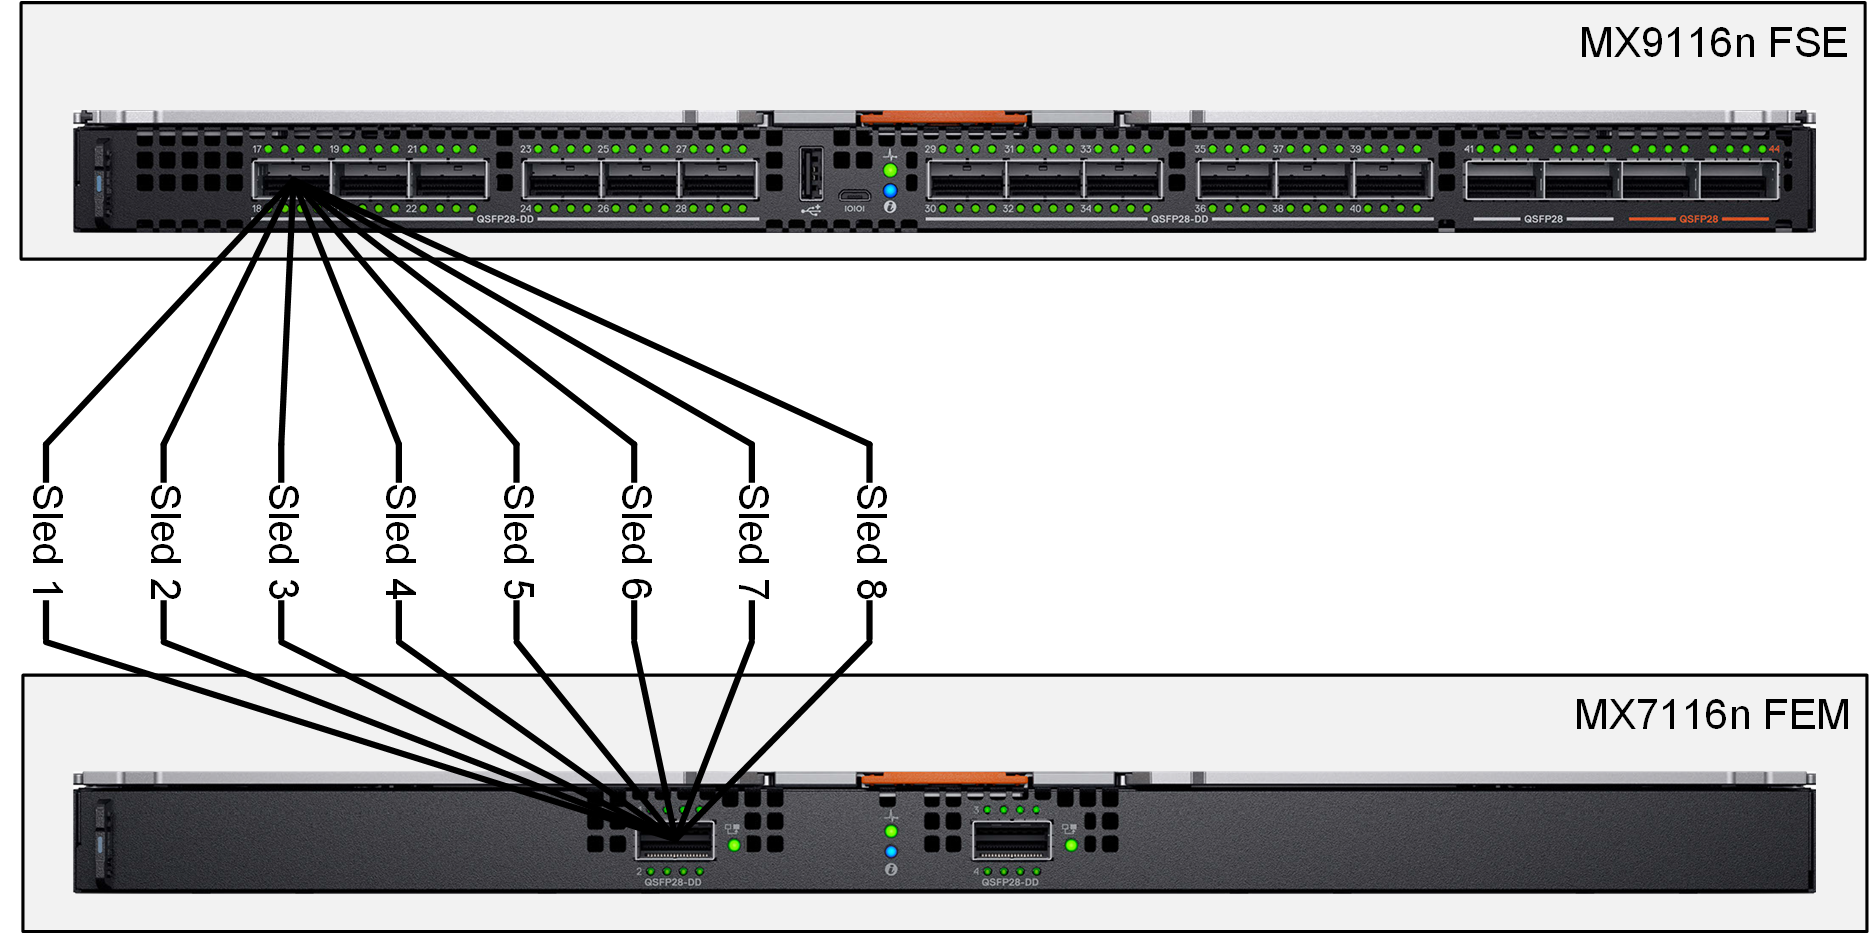 QSFP28-DD connection between MX9116n FSE and MX7116n FEM